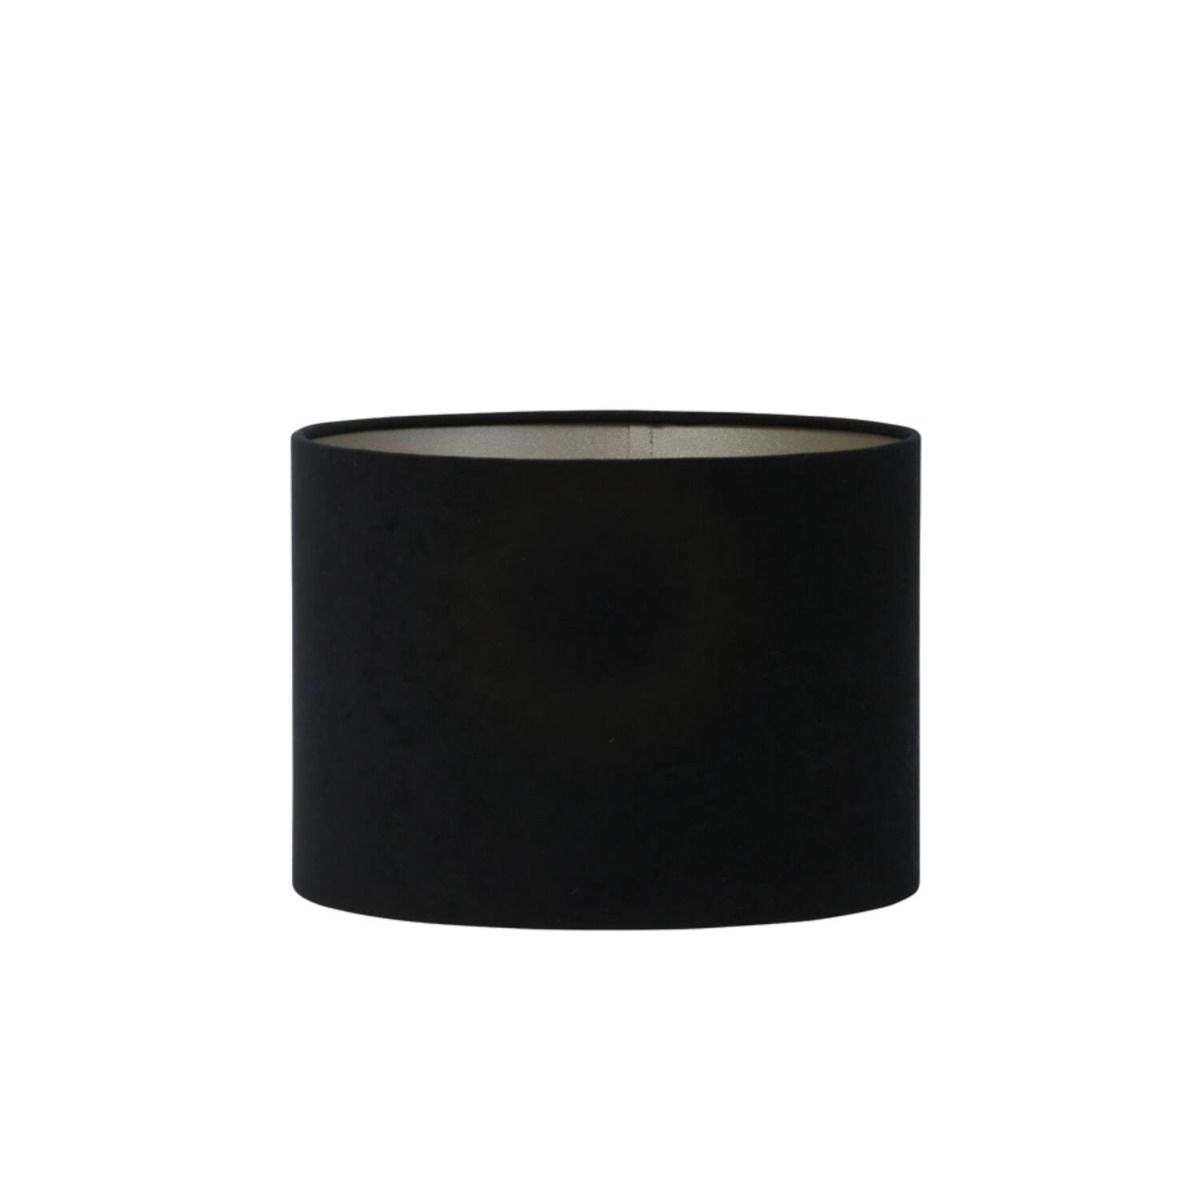 Kap cilinder 20-20-15 cm Velours zwart-taupe